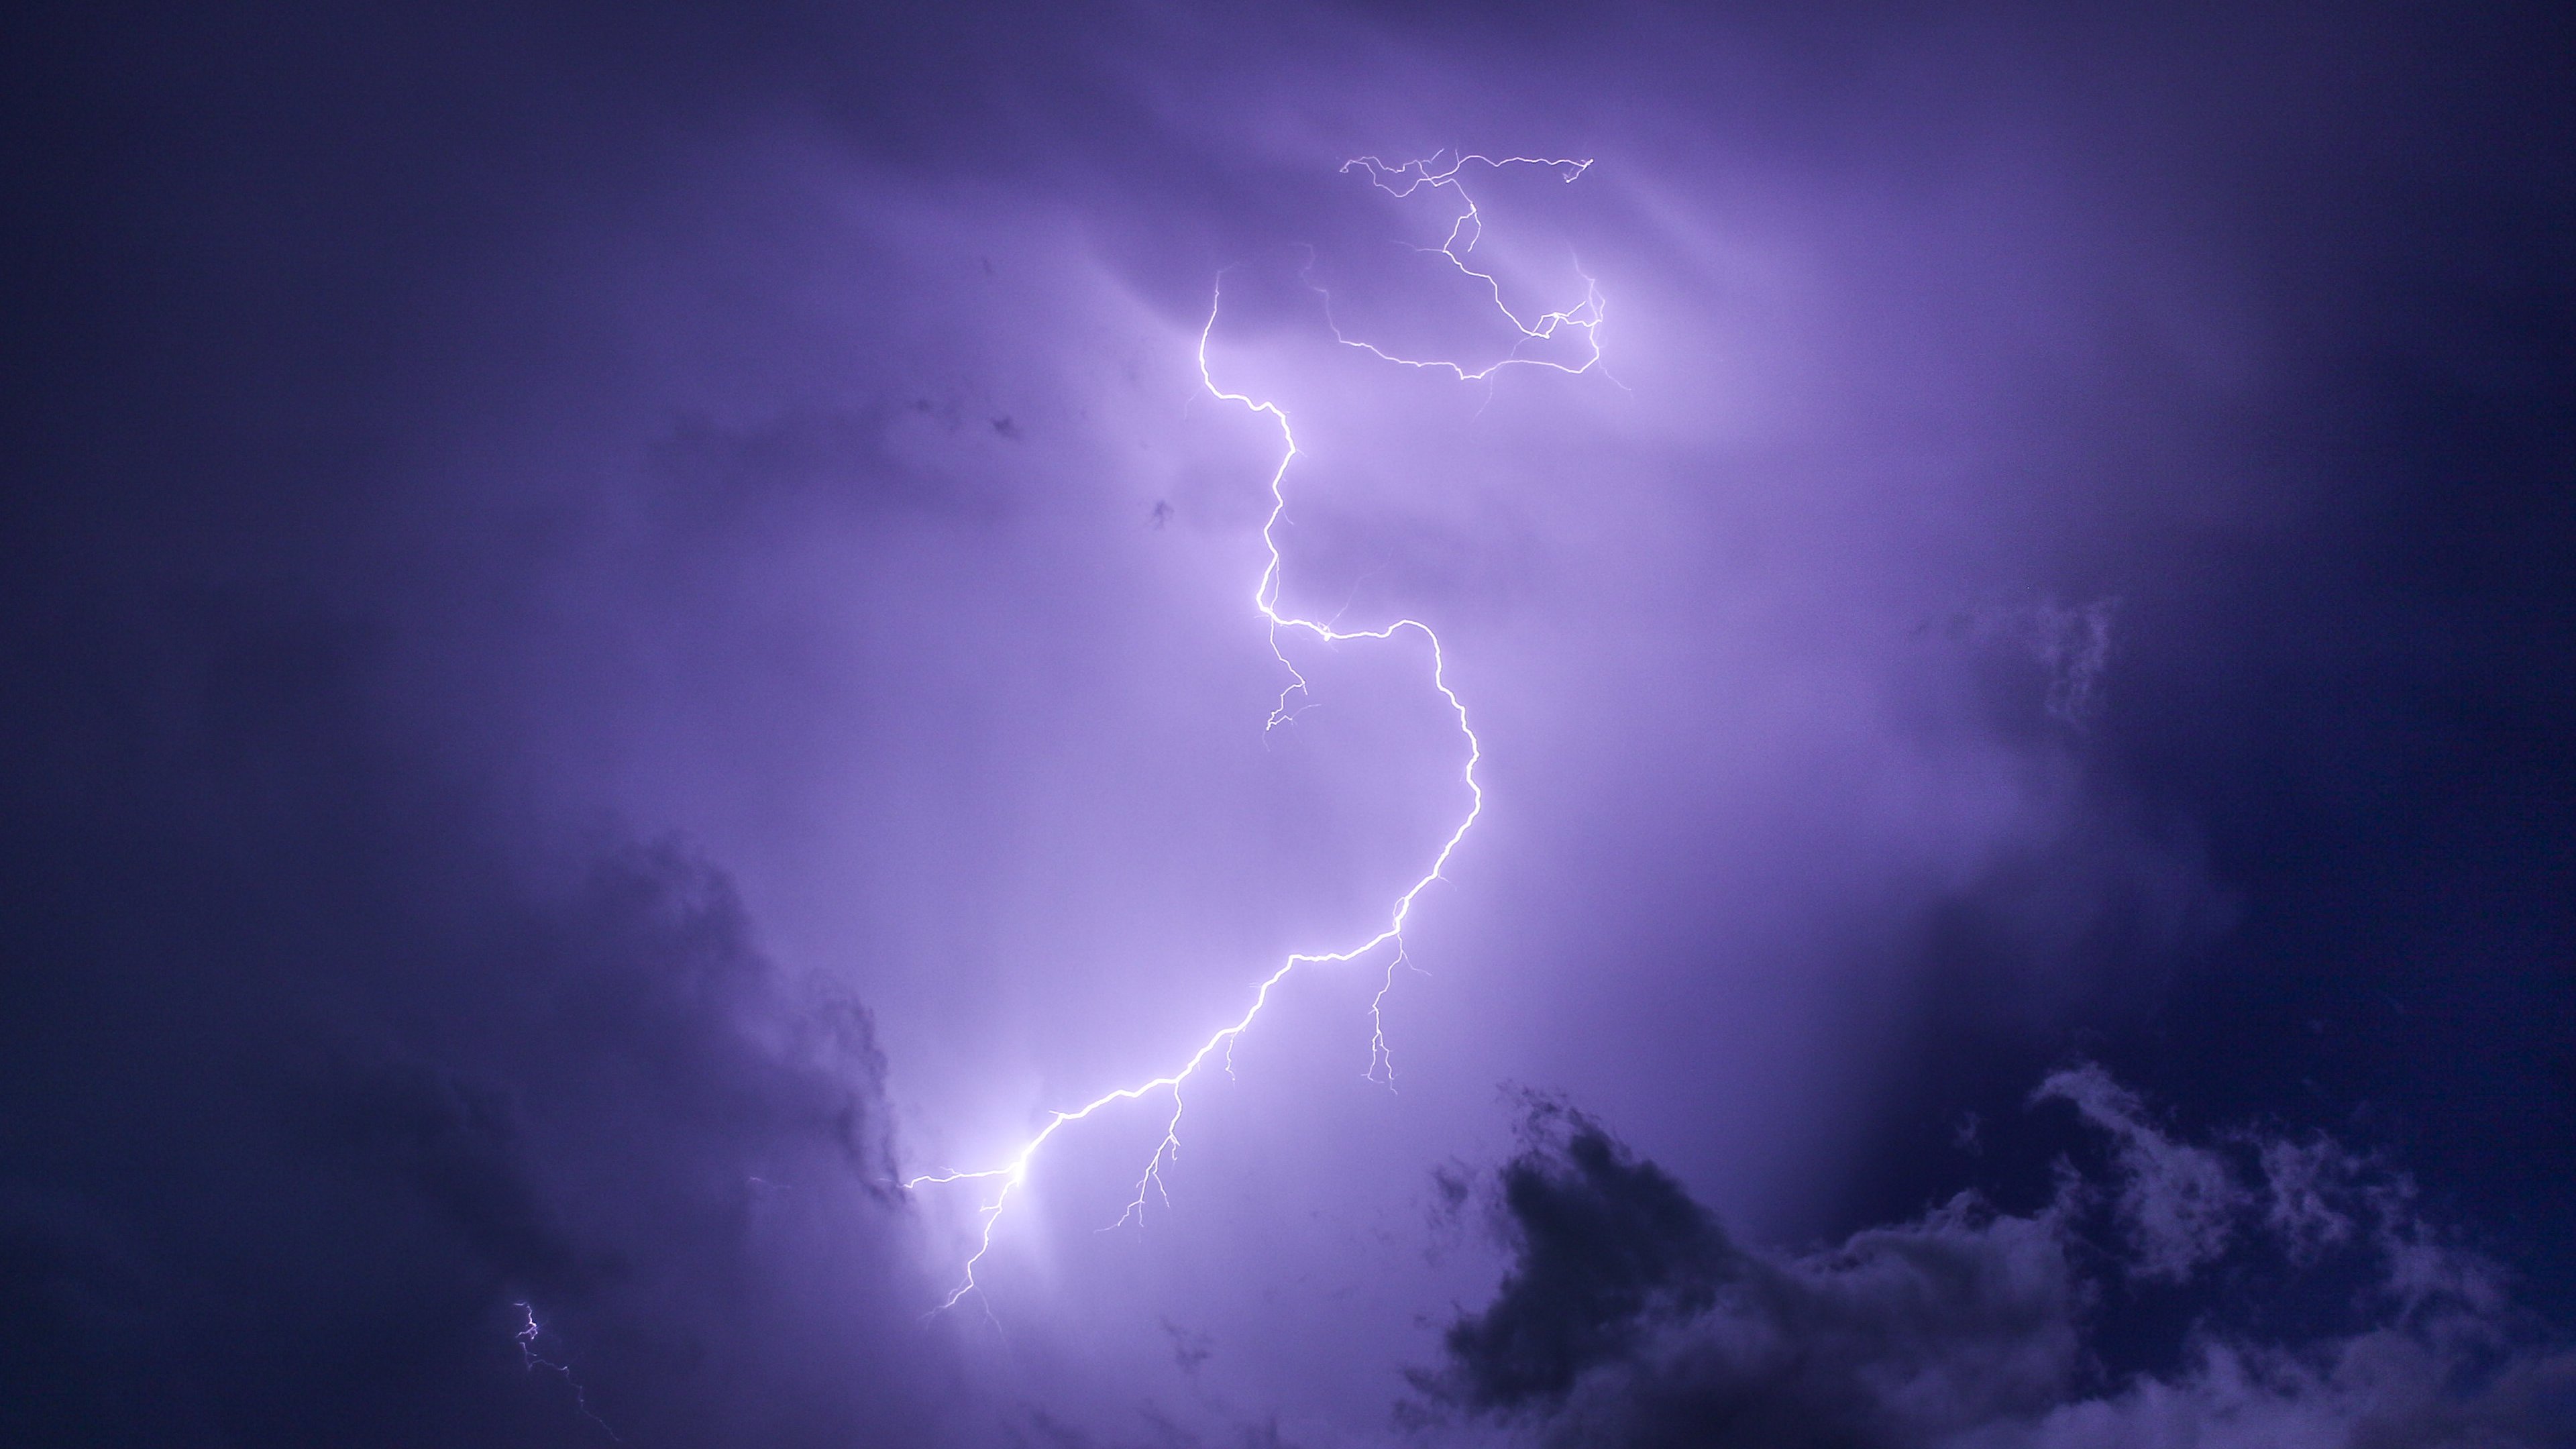 A lightning bolt strikes the sky in this photo - Lightning